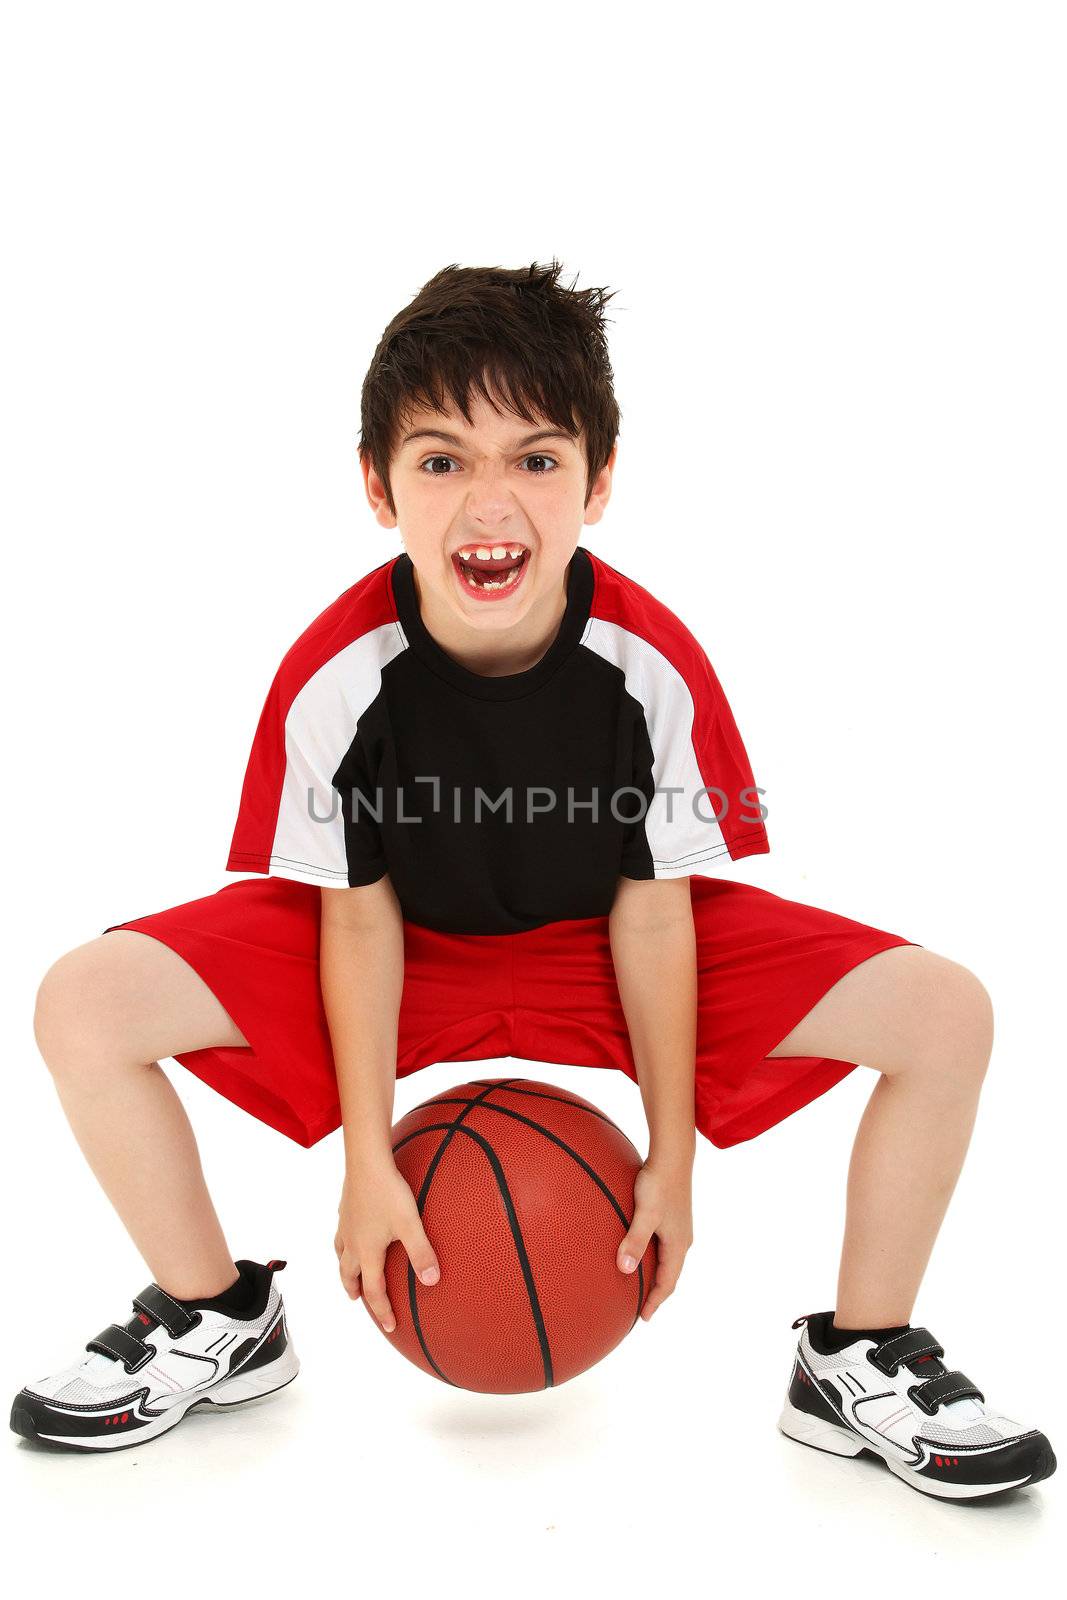 Goofy Funny Boy Child Basketball Player by duplass